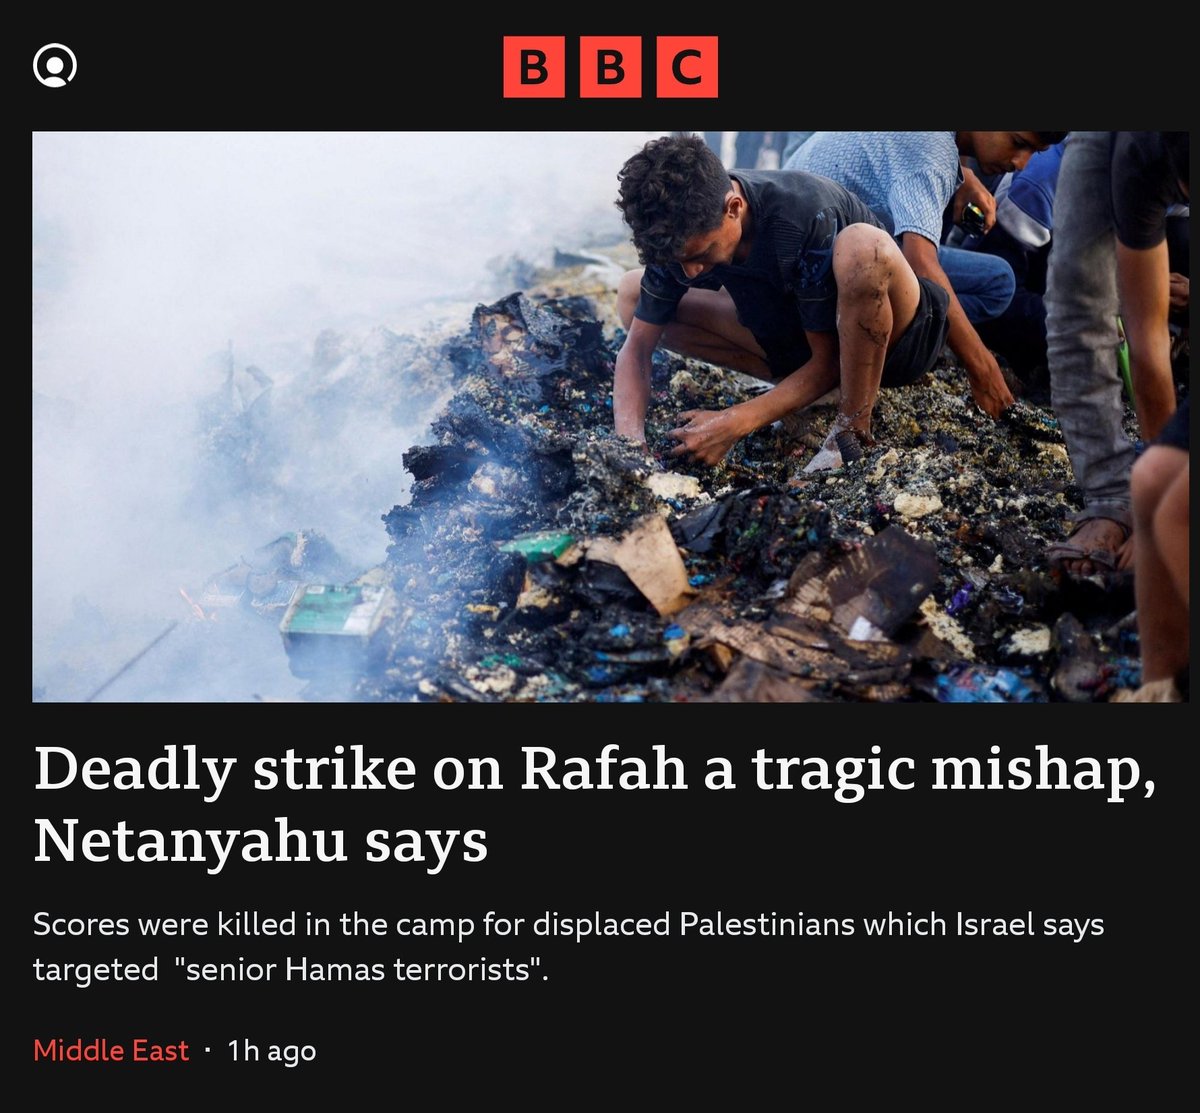 @BBCNews coverage of the Rafah Massacre is, yet again, worded like exactly like a Netanyahu press release. Shameful, spineless and pathetic.